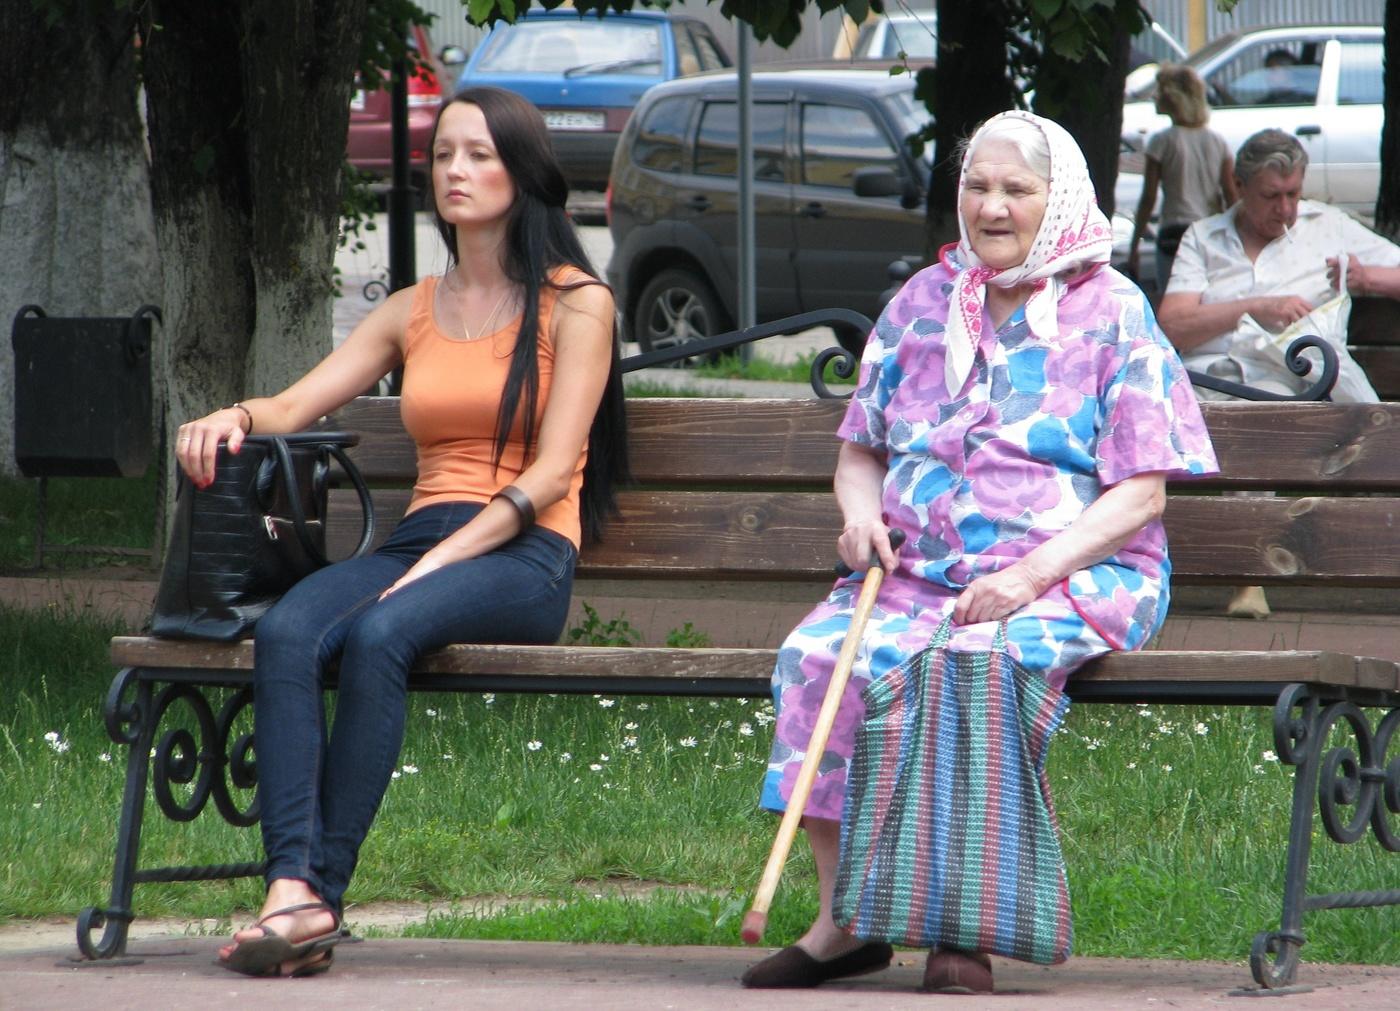 Бабушка сидит на скамейке